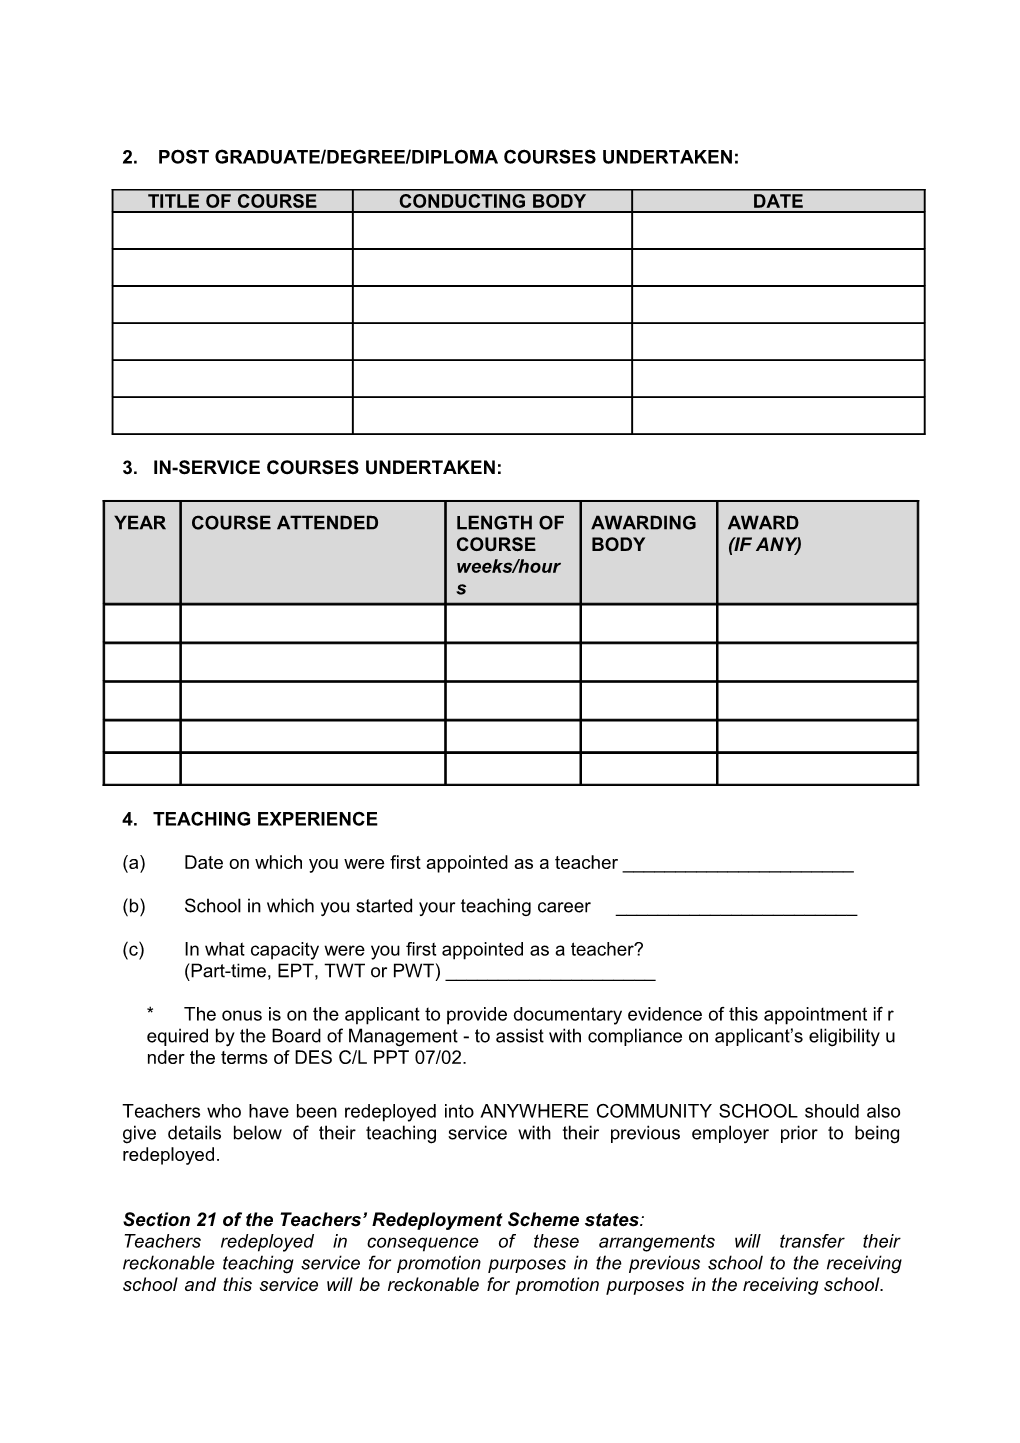 Appendix 5(A) (Exemplar) - Application Form for the Post of Assistant Principal